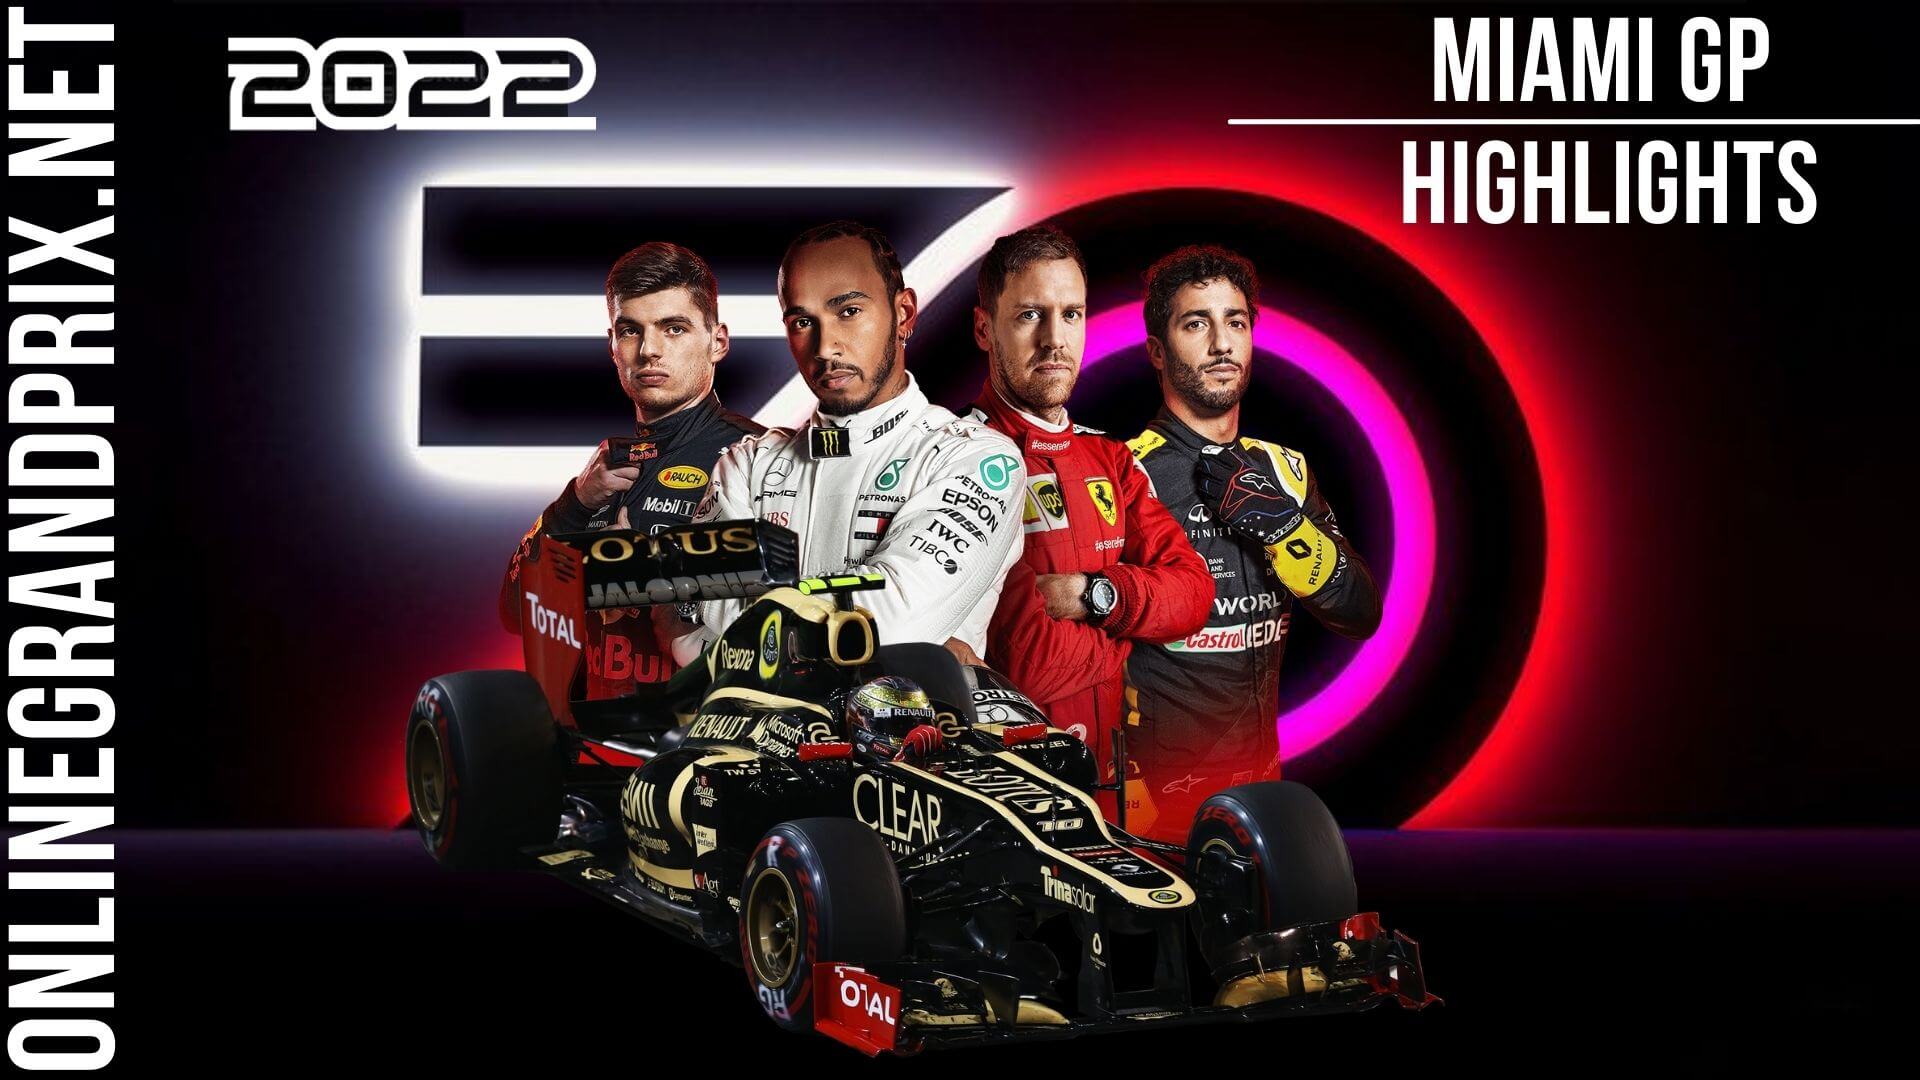 Miami GP F1 Highlights 2022